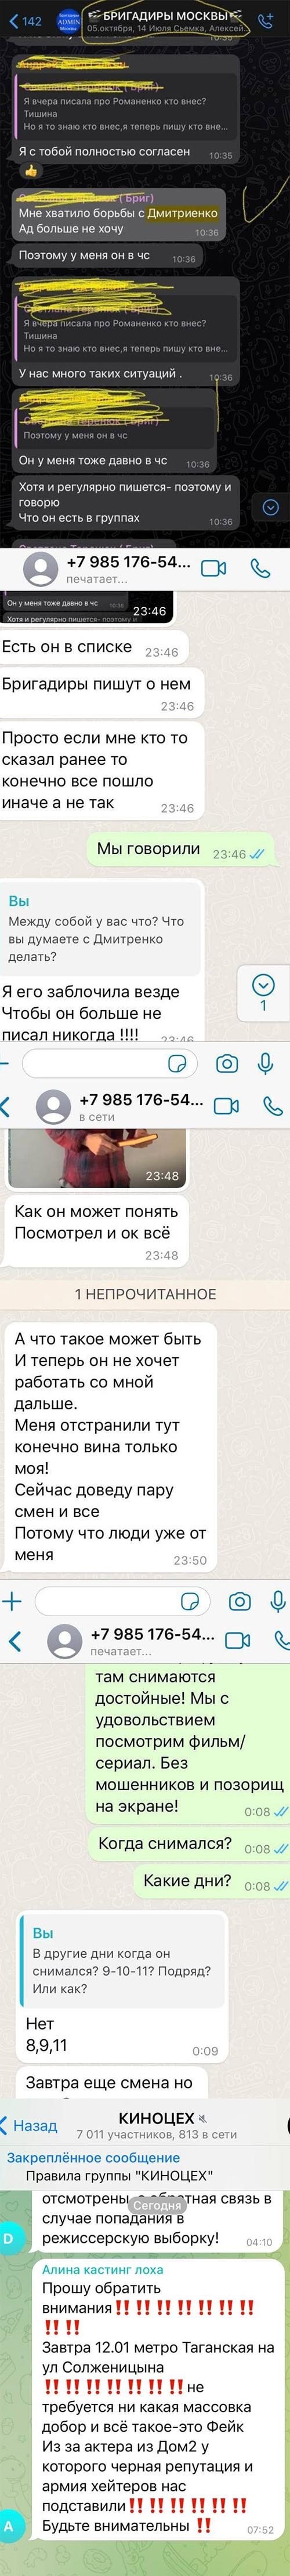 Переписка про Дмитрия Дмитренко вконтакте